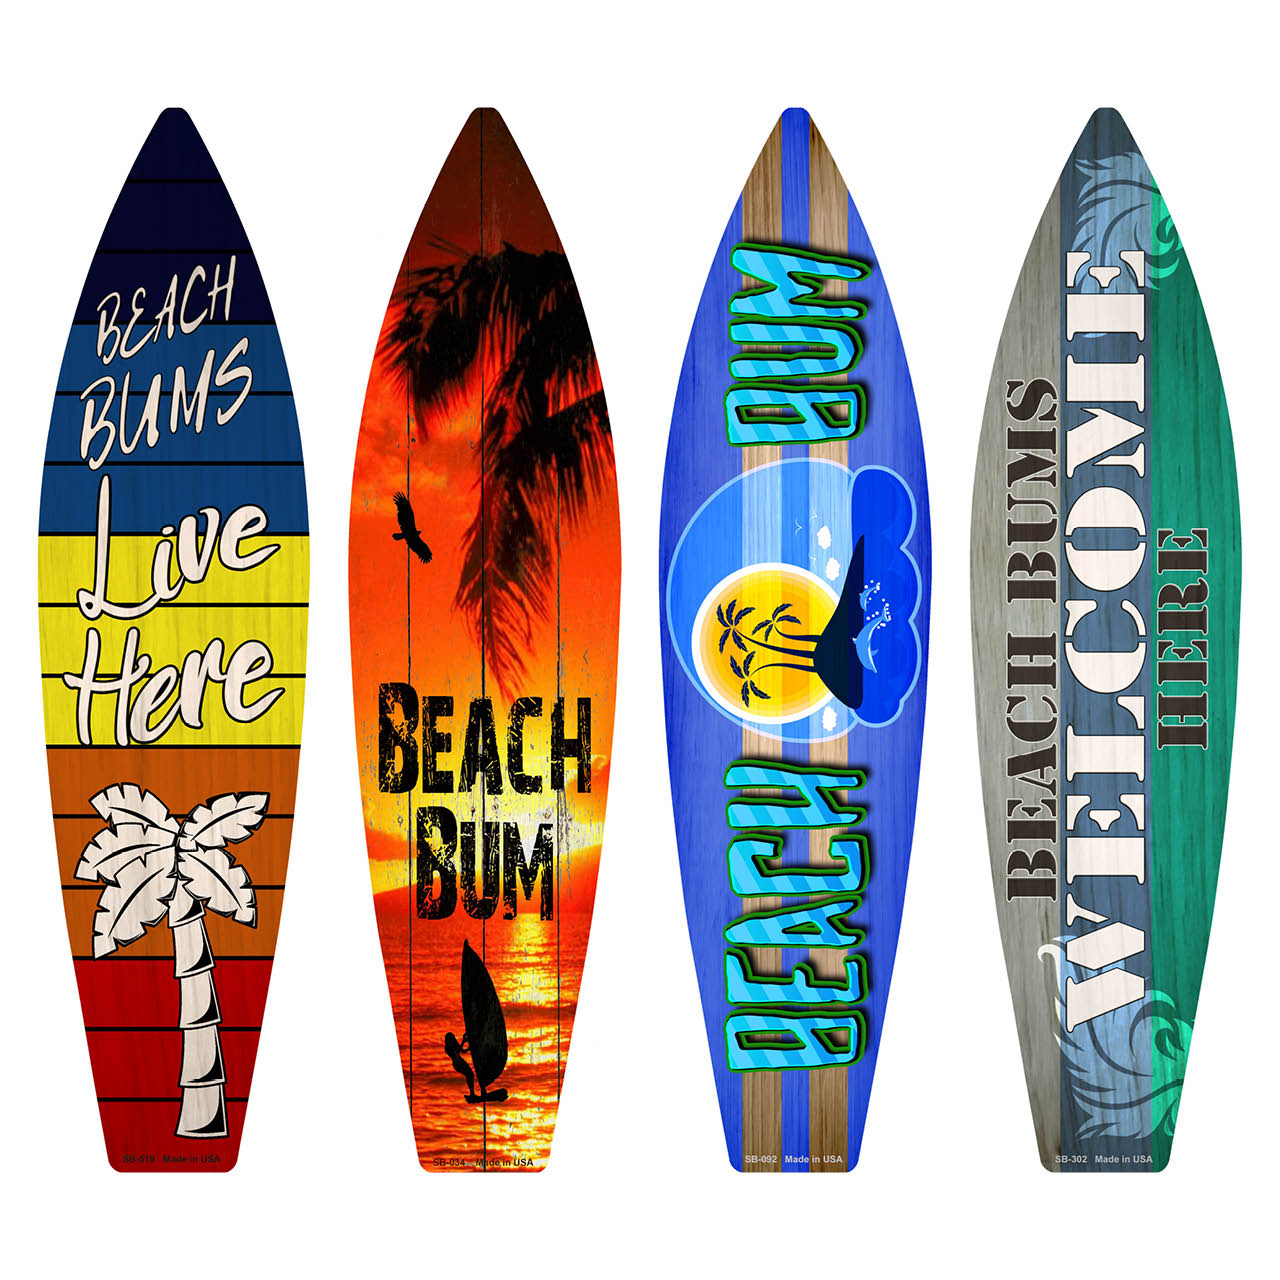 Beach Bums Surfboard Set Wholesale Novelty Metal Set of 4 SB-Pack-03